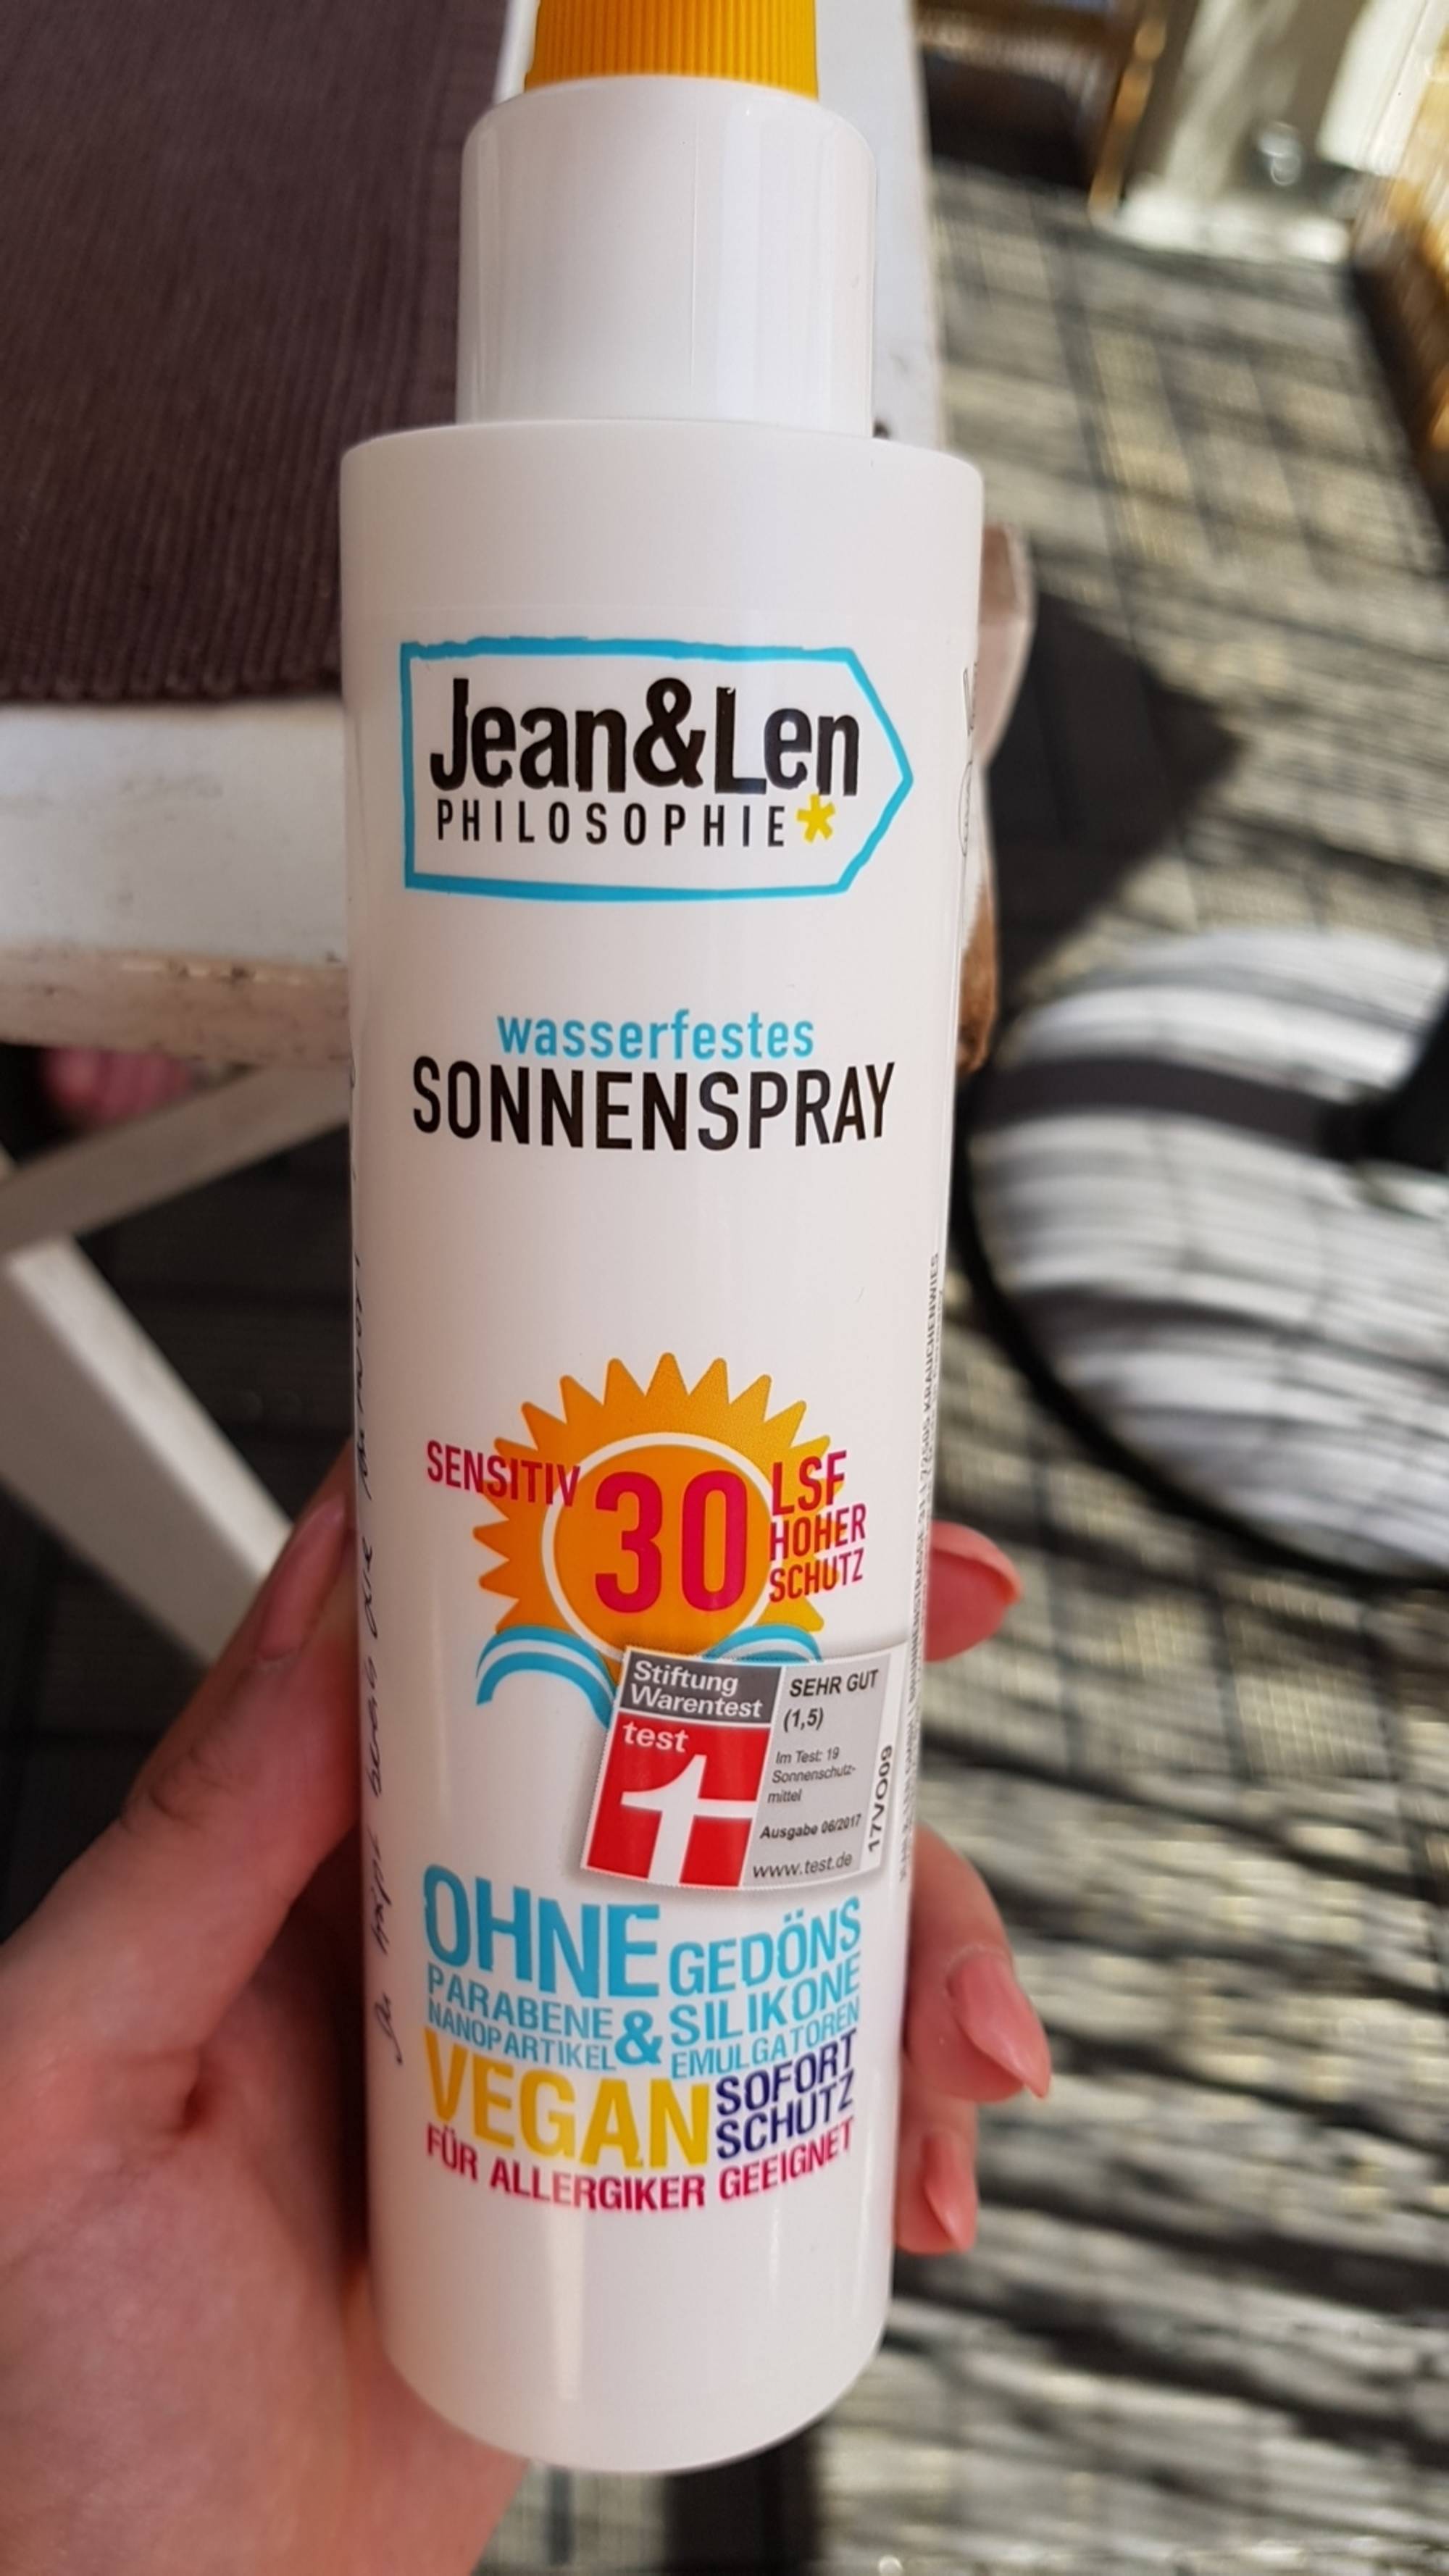 JEAN&LEN PHILOSOPHE - Wasserfestes - Sonnenspray sensitiv LSF 30